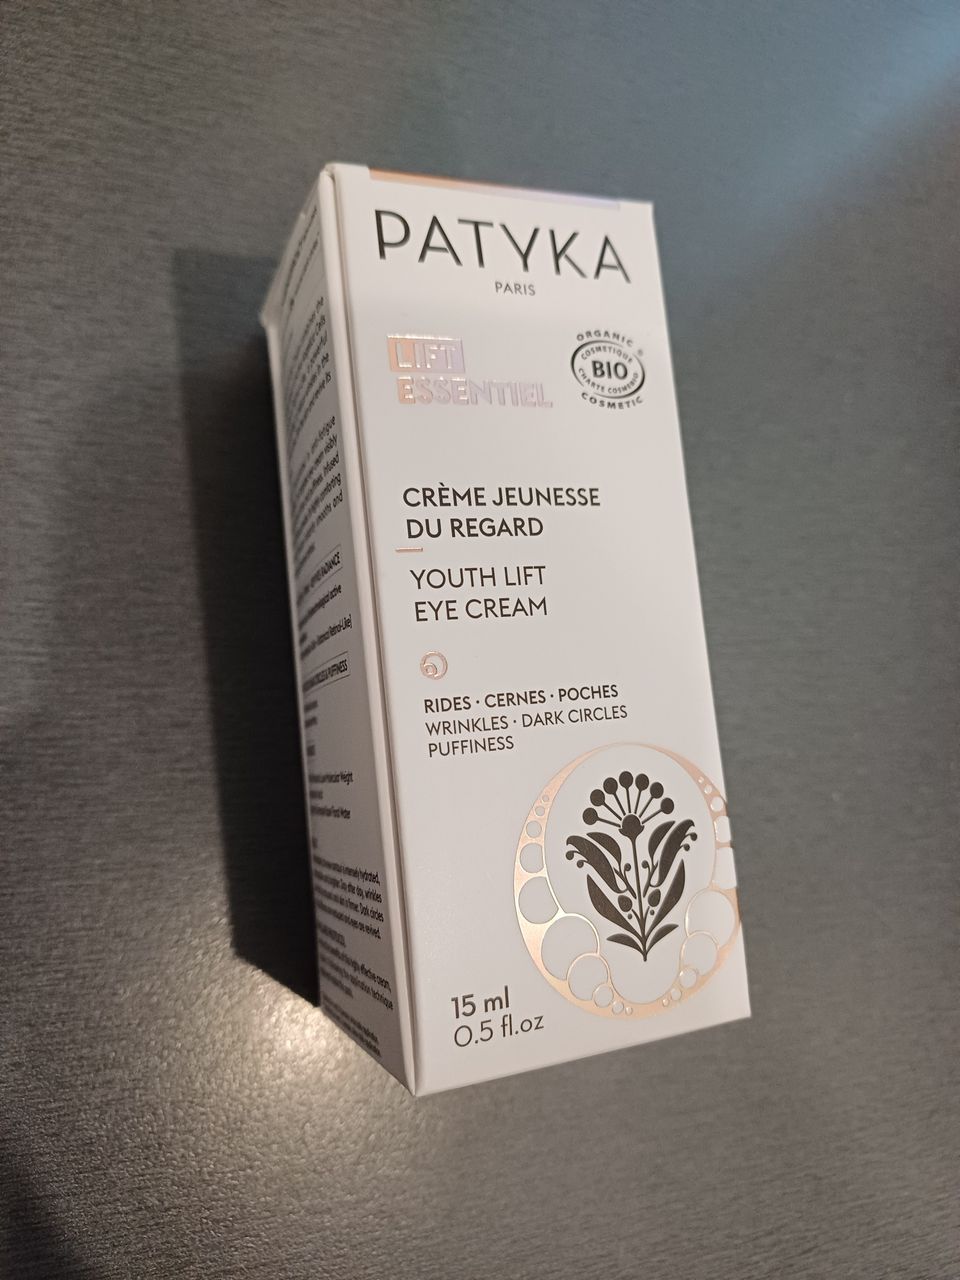 Patyka youth lift eye cream